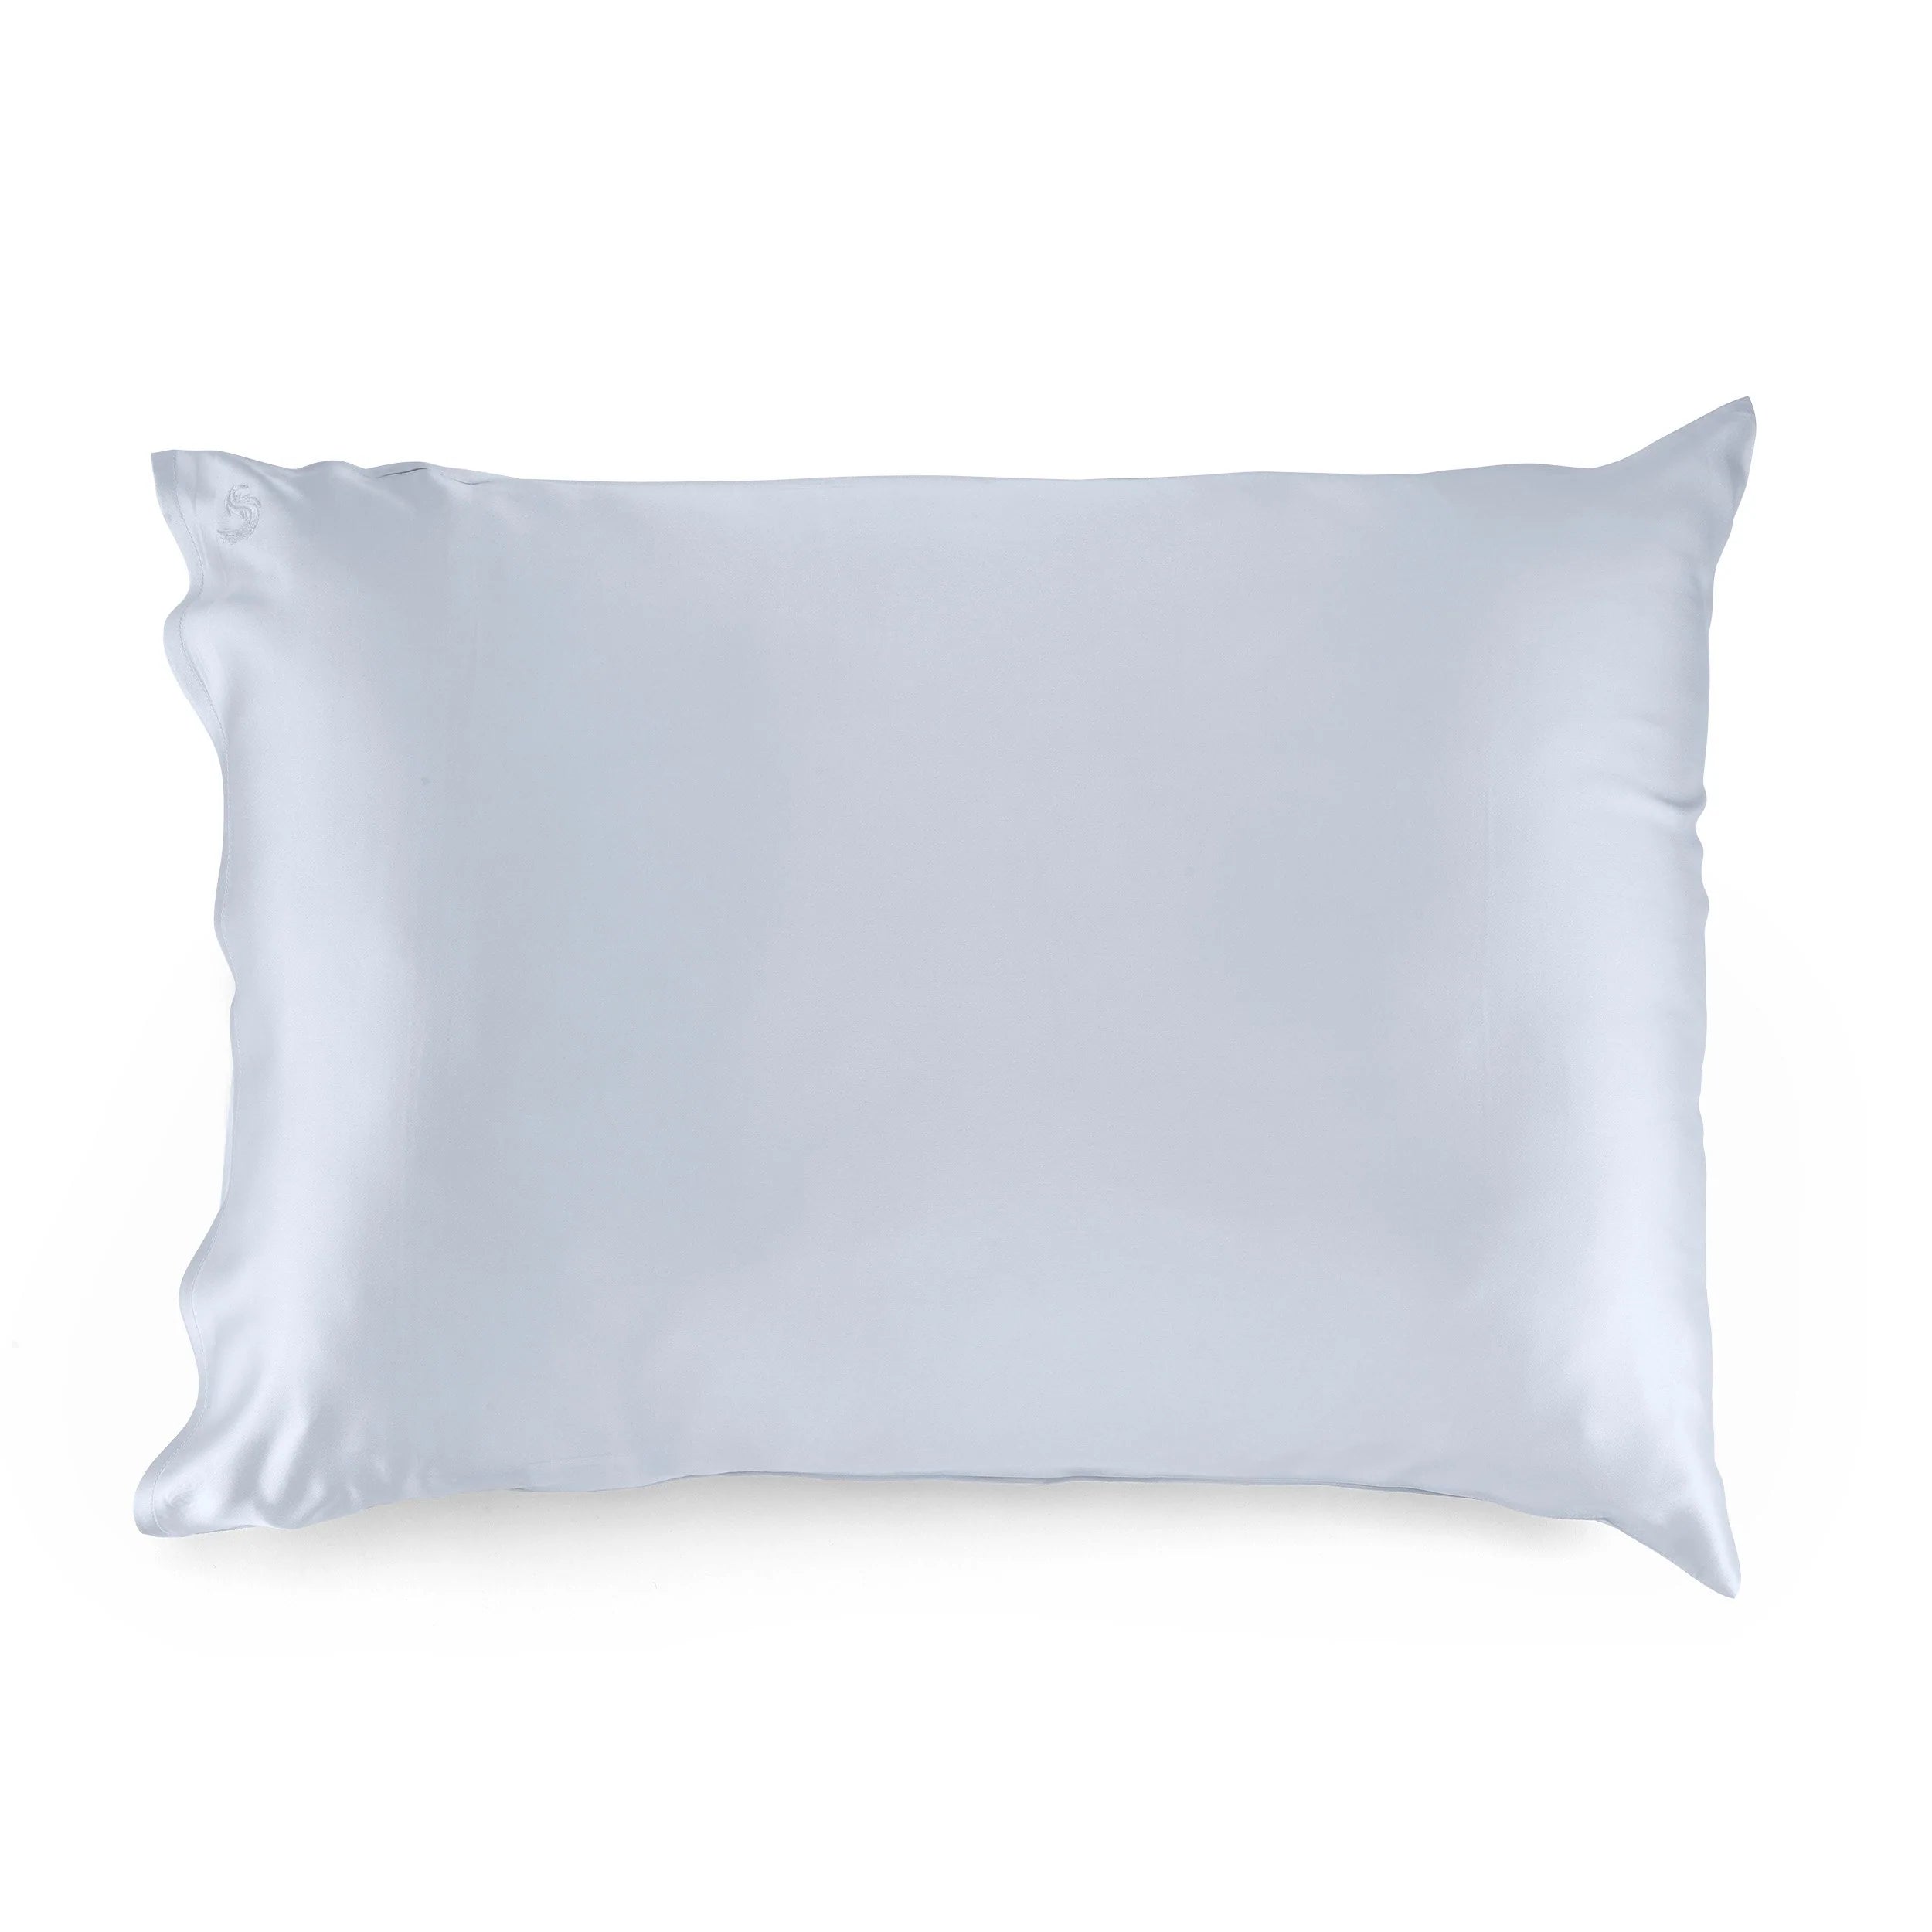 Sleepgram Pillow - PREMIUM Adjustable Loft - Soft Hypoallergenic Microfiber  P - Conseil scolaire francophone de Terre-Neuve et Labrador